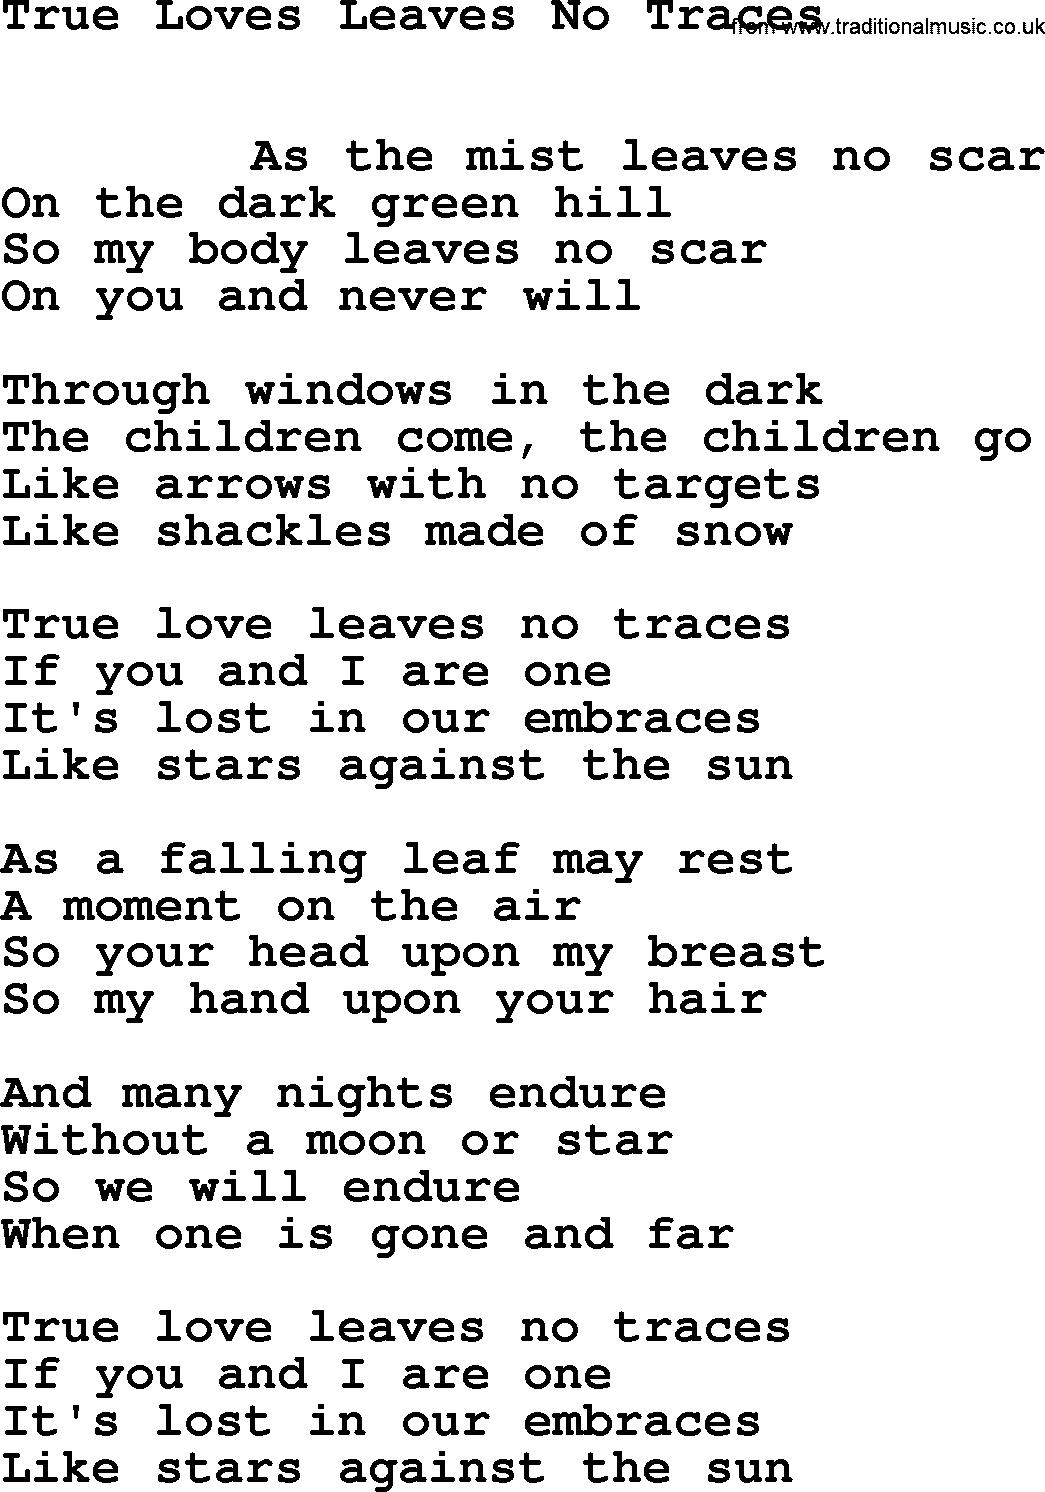 Leonard Cohen song True Loves Leaves No Traces-leonard-cohen.txt lyrics